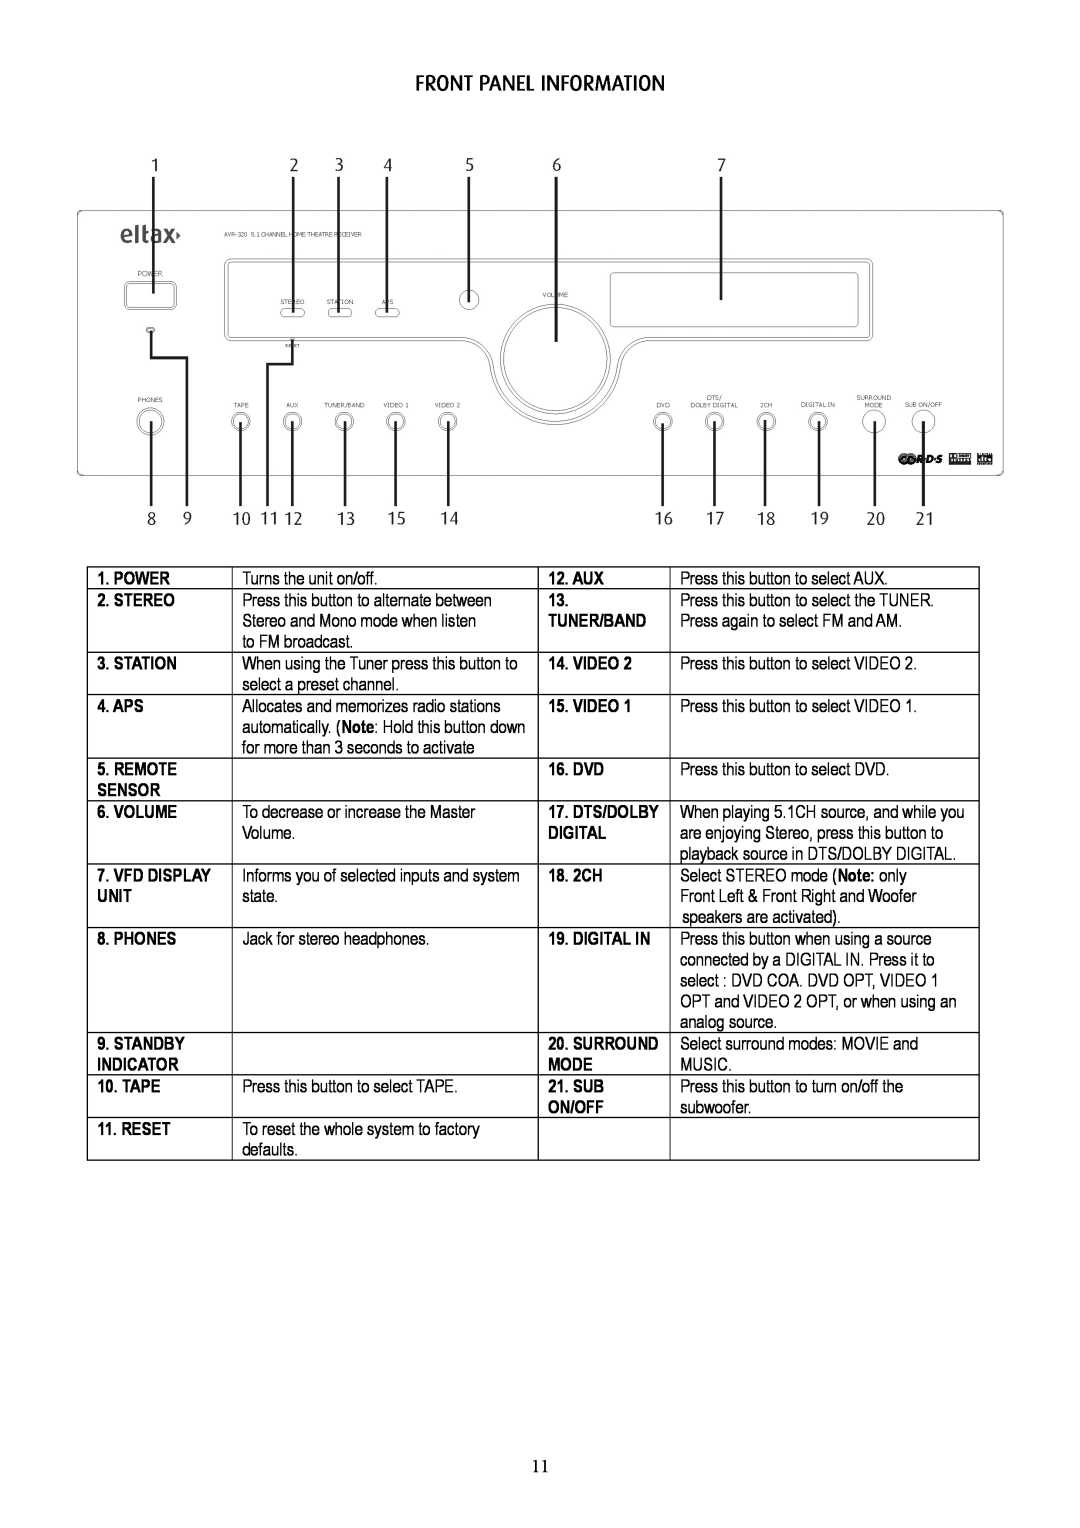 Eltax AVR-320 Front Panel Information, Power, Aux, Stereo, Tuner/Band, Station, Video, Aps, Remote, Dvd, Sensor, Volume 